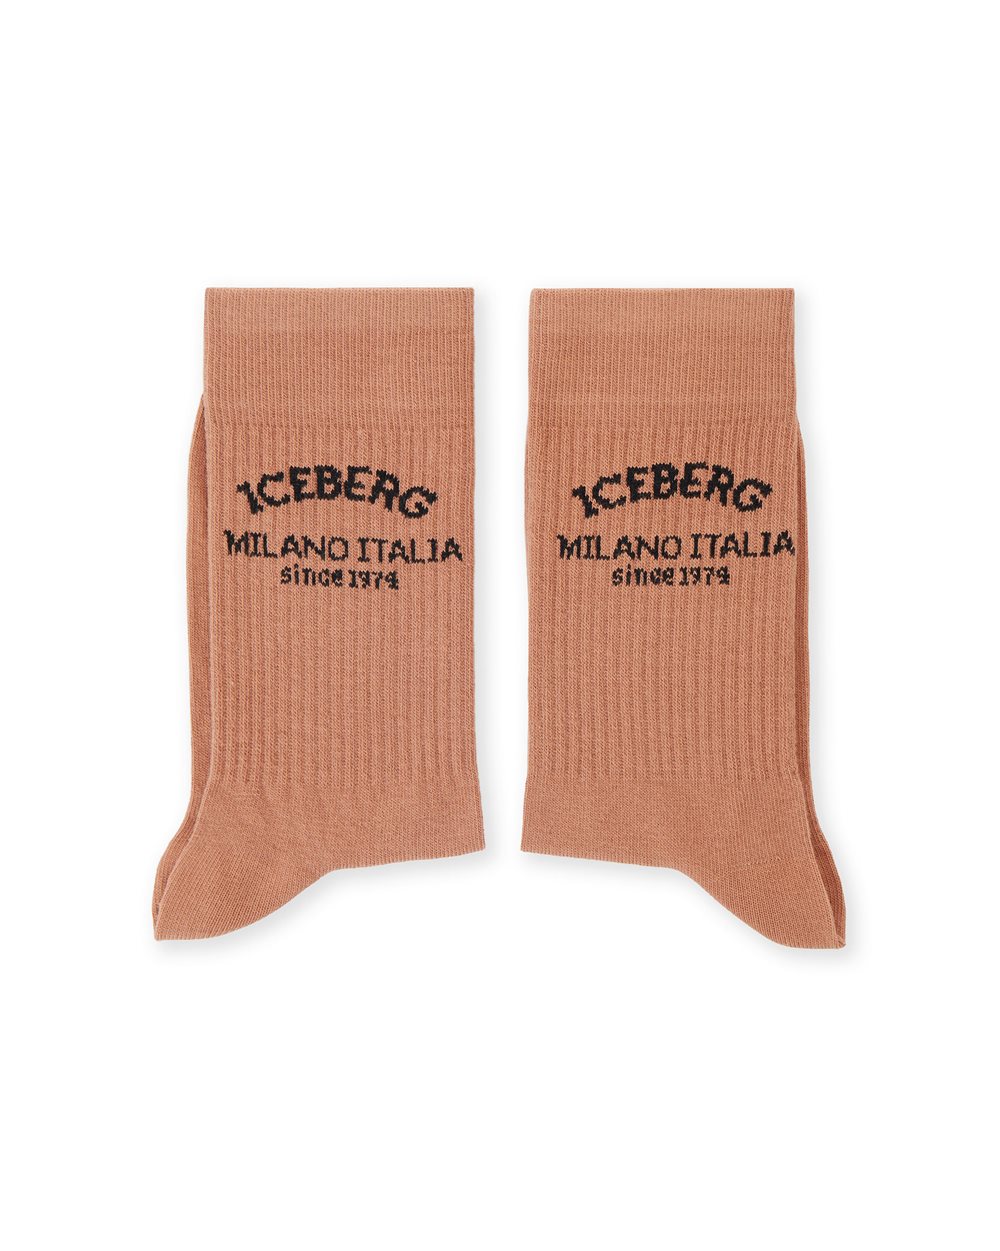 Sock with logo - Iceberg - Official Website